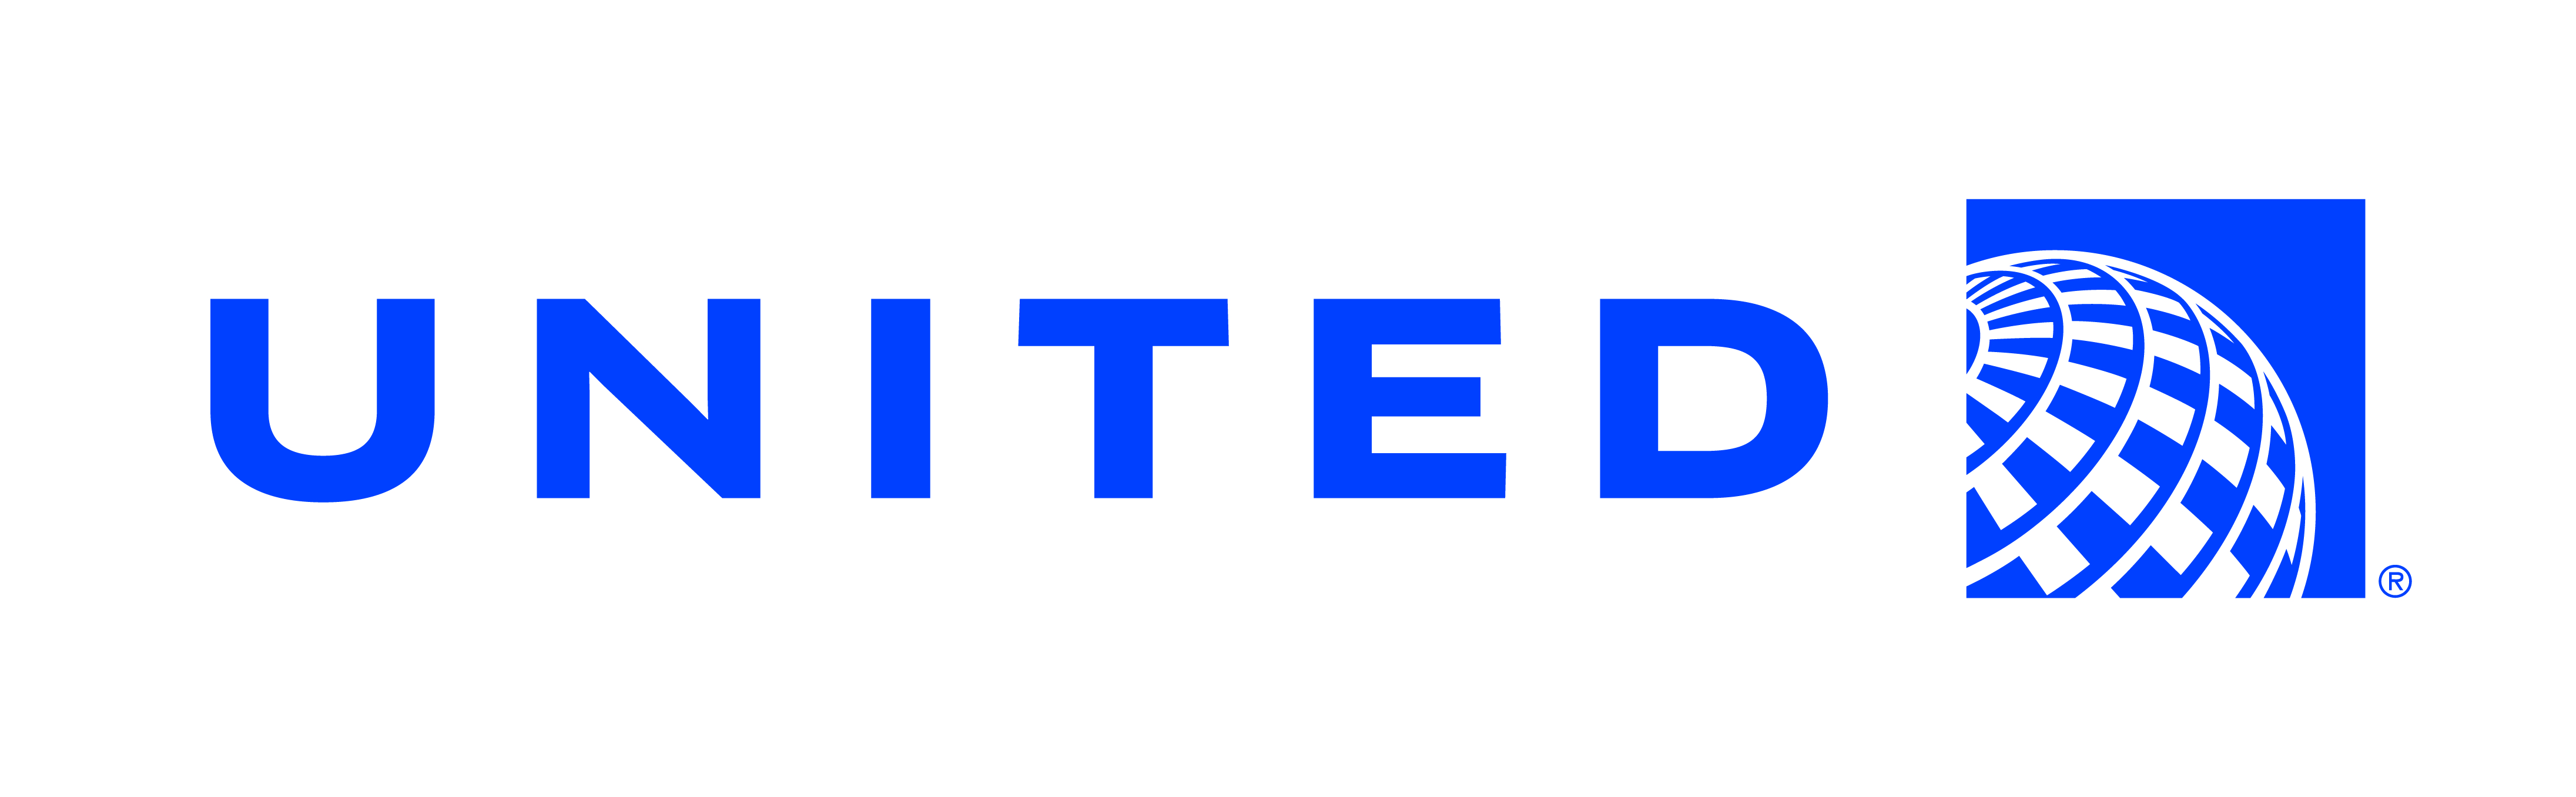 Image United - Wikipedia